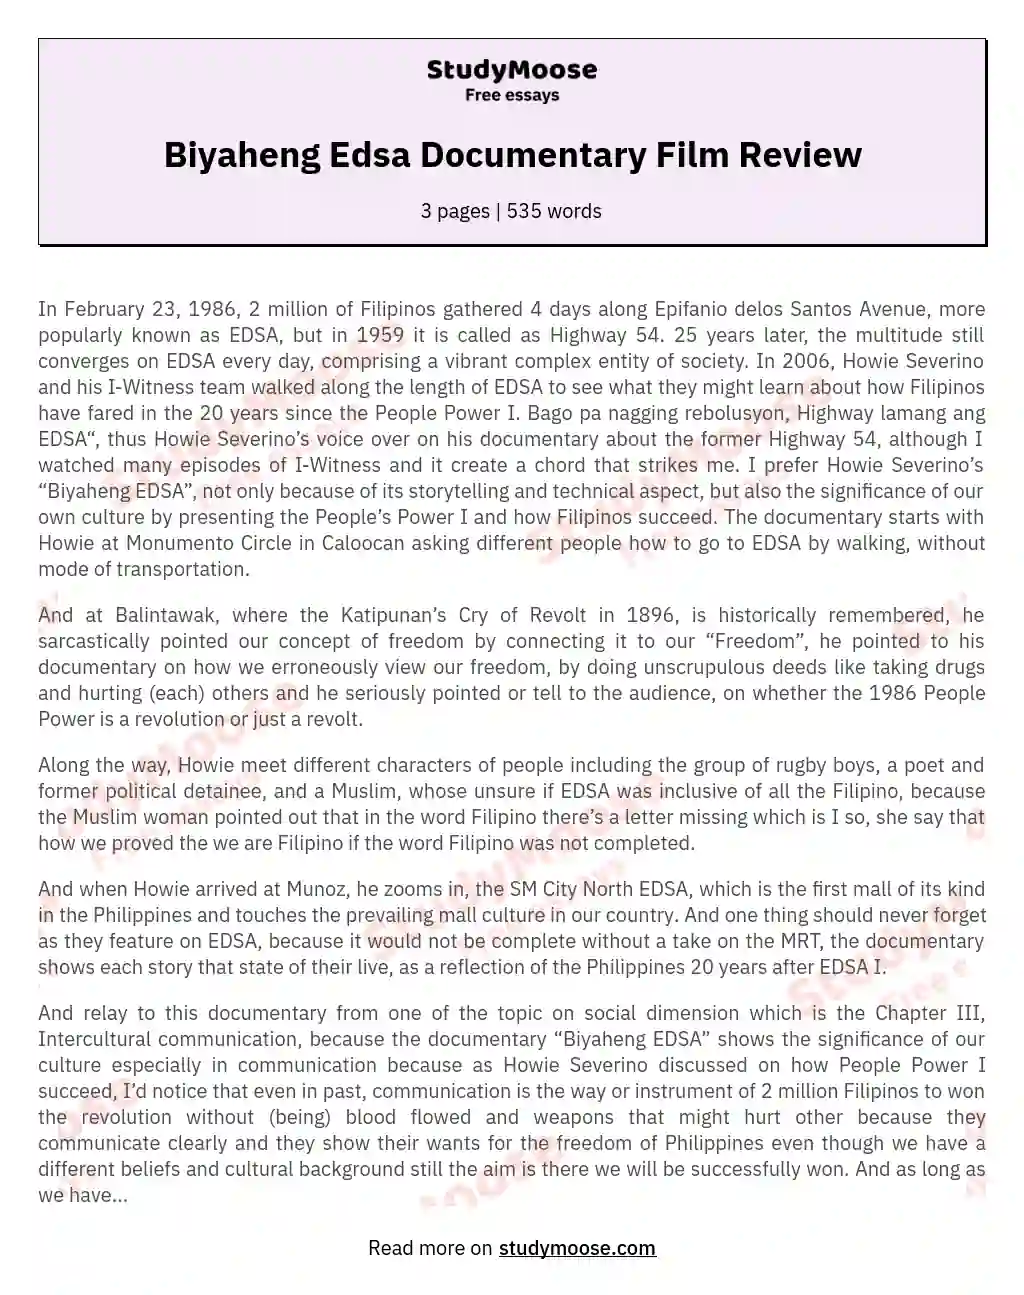 Biyaheng Edsa Documentary Film Review essay